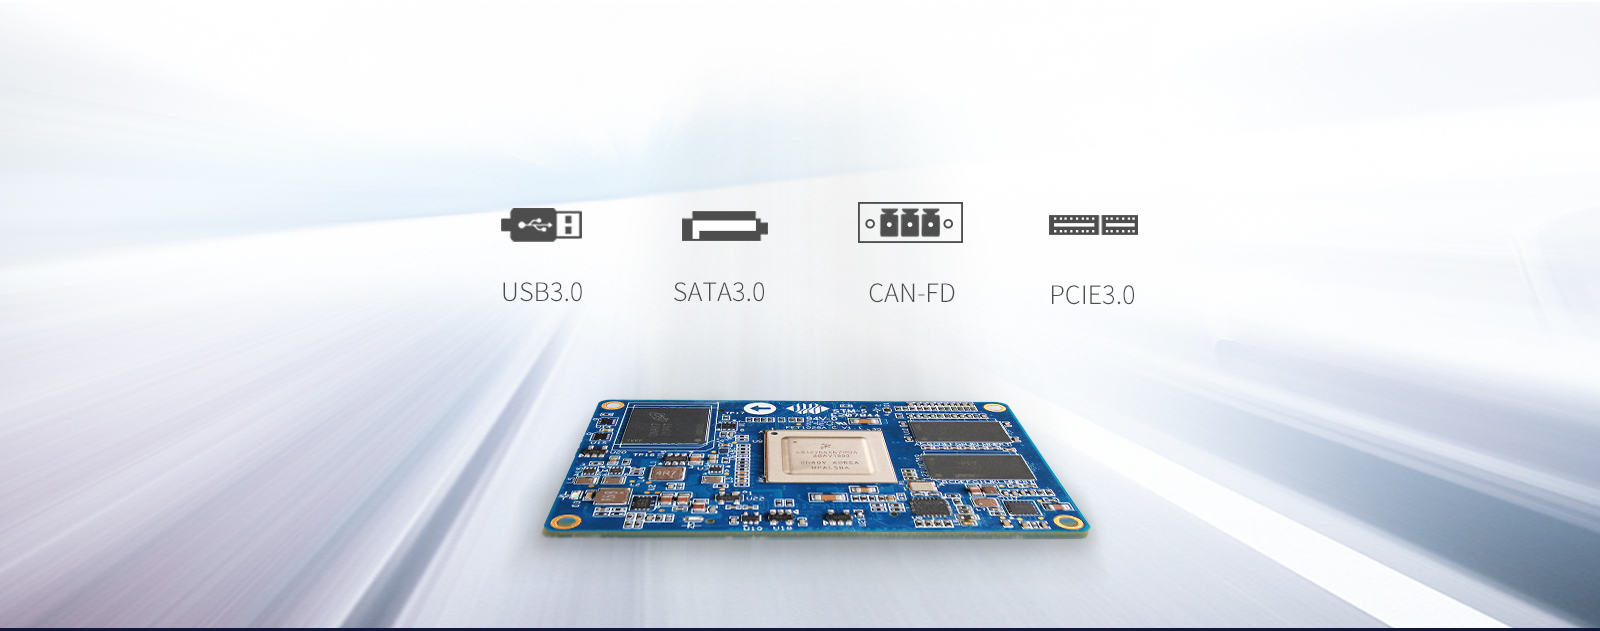 LS1028 6 Gigabit Ethernet ports, PCIe3.0, SATA3.0, USB3.0, CAN-FD